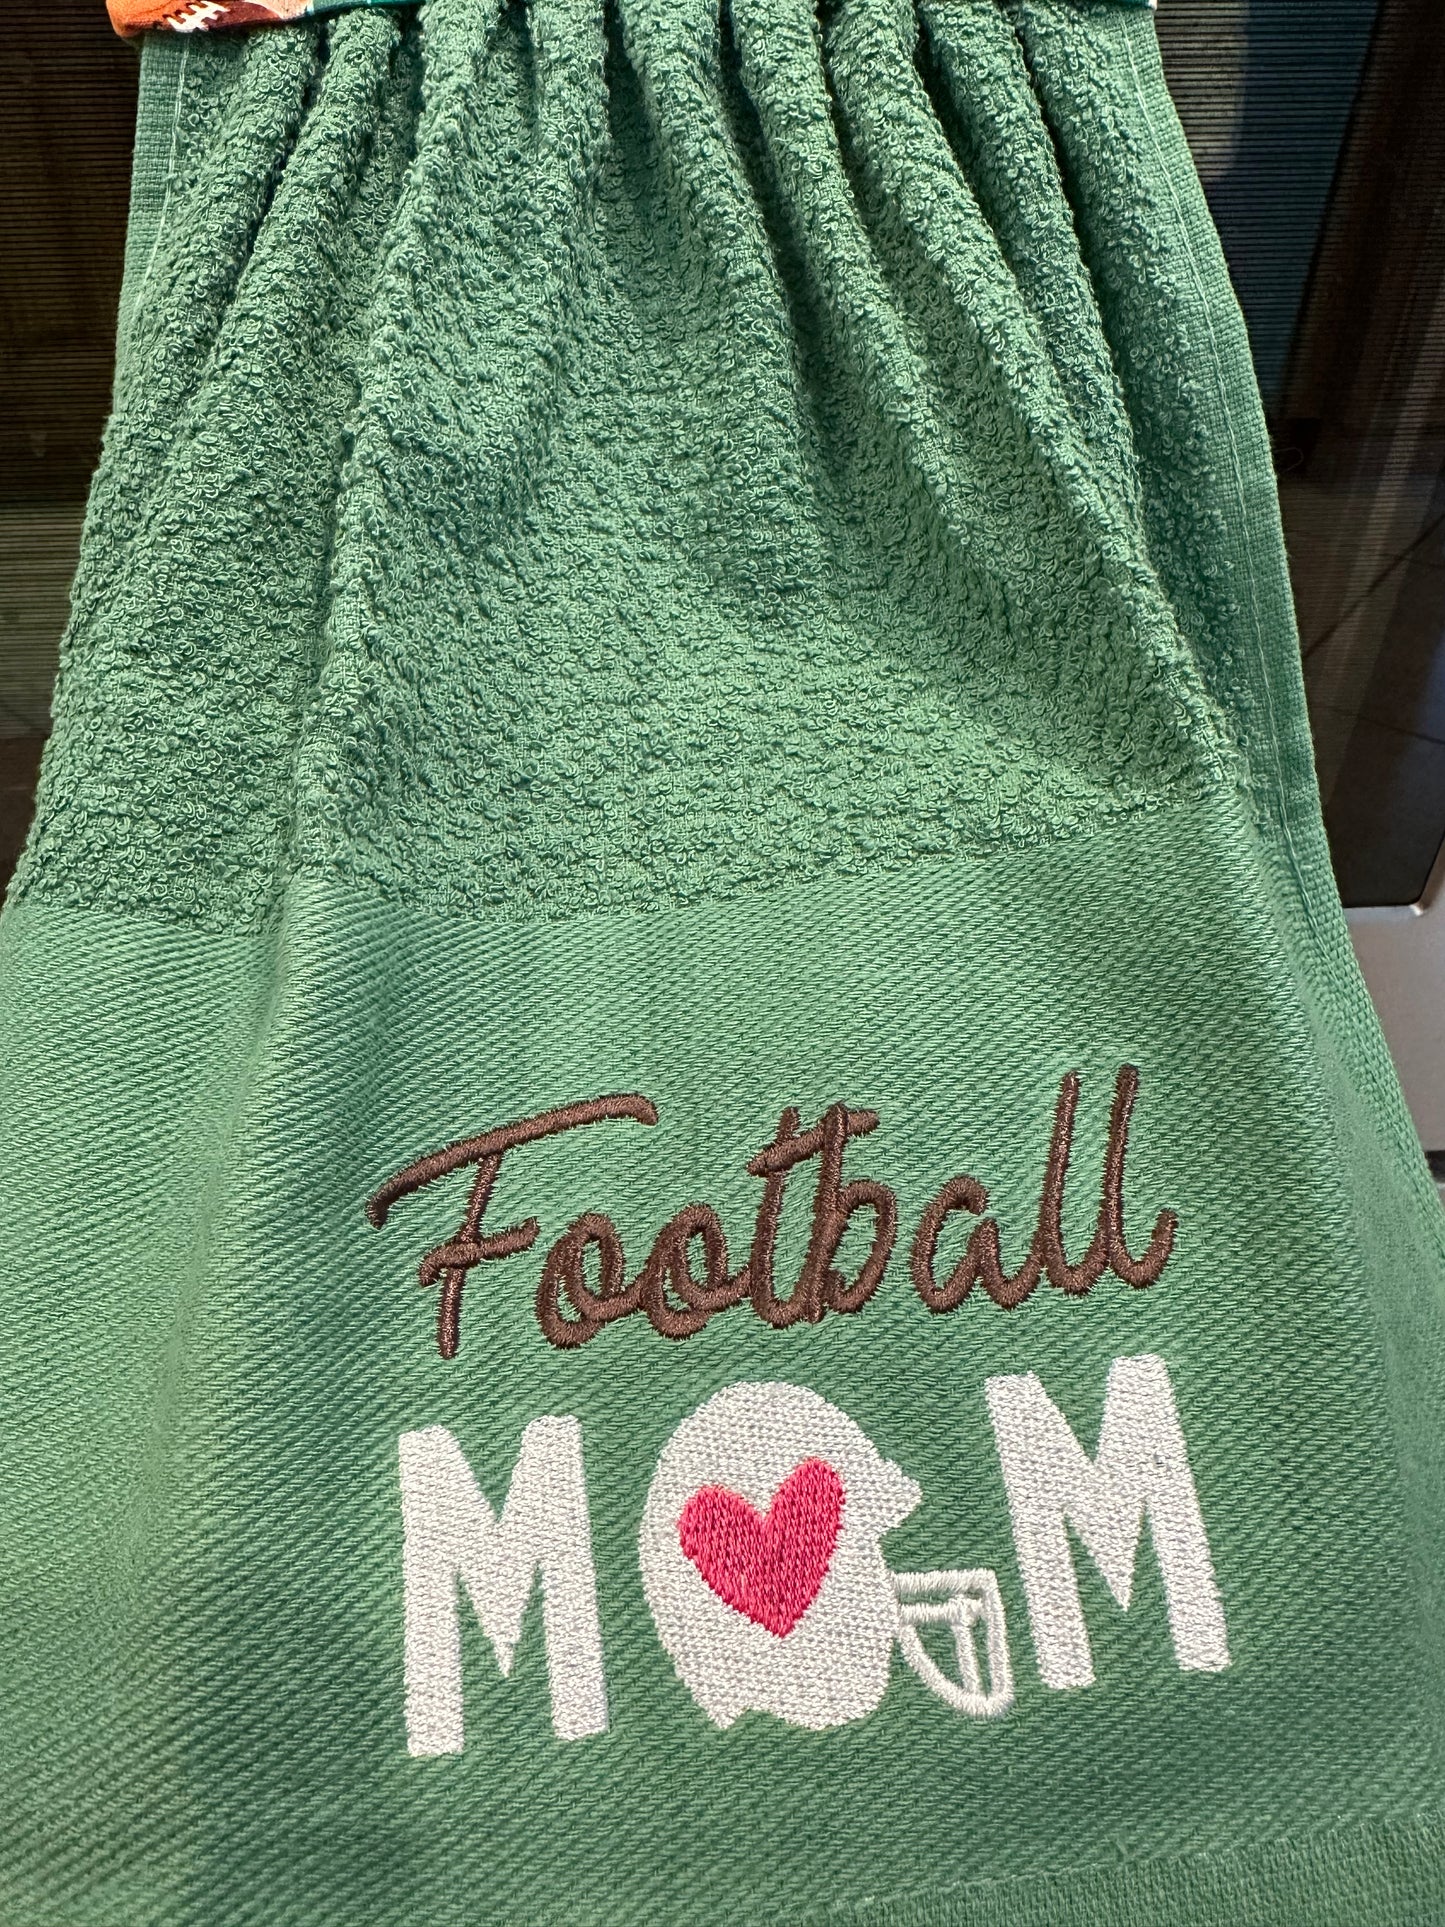 Football Mom Towel